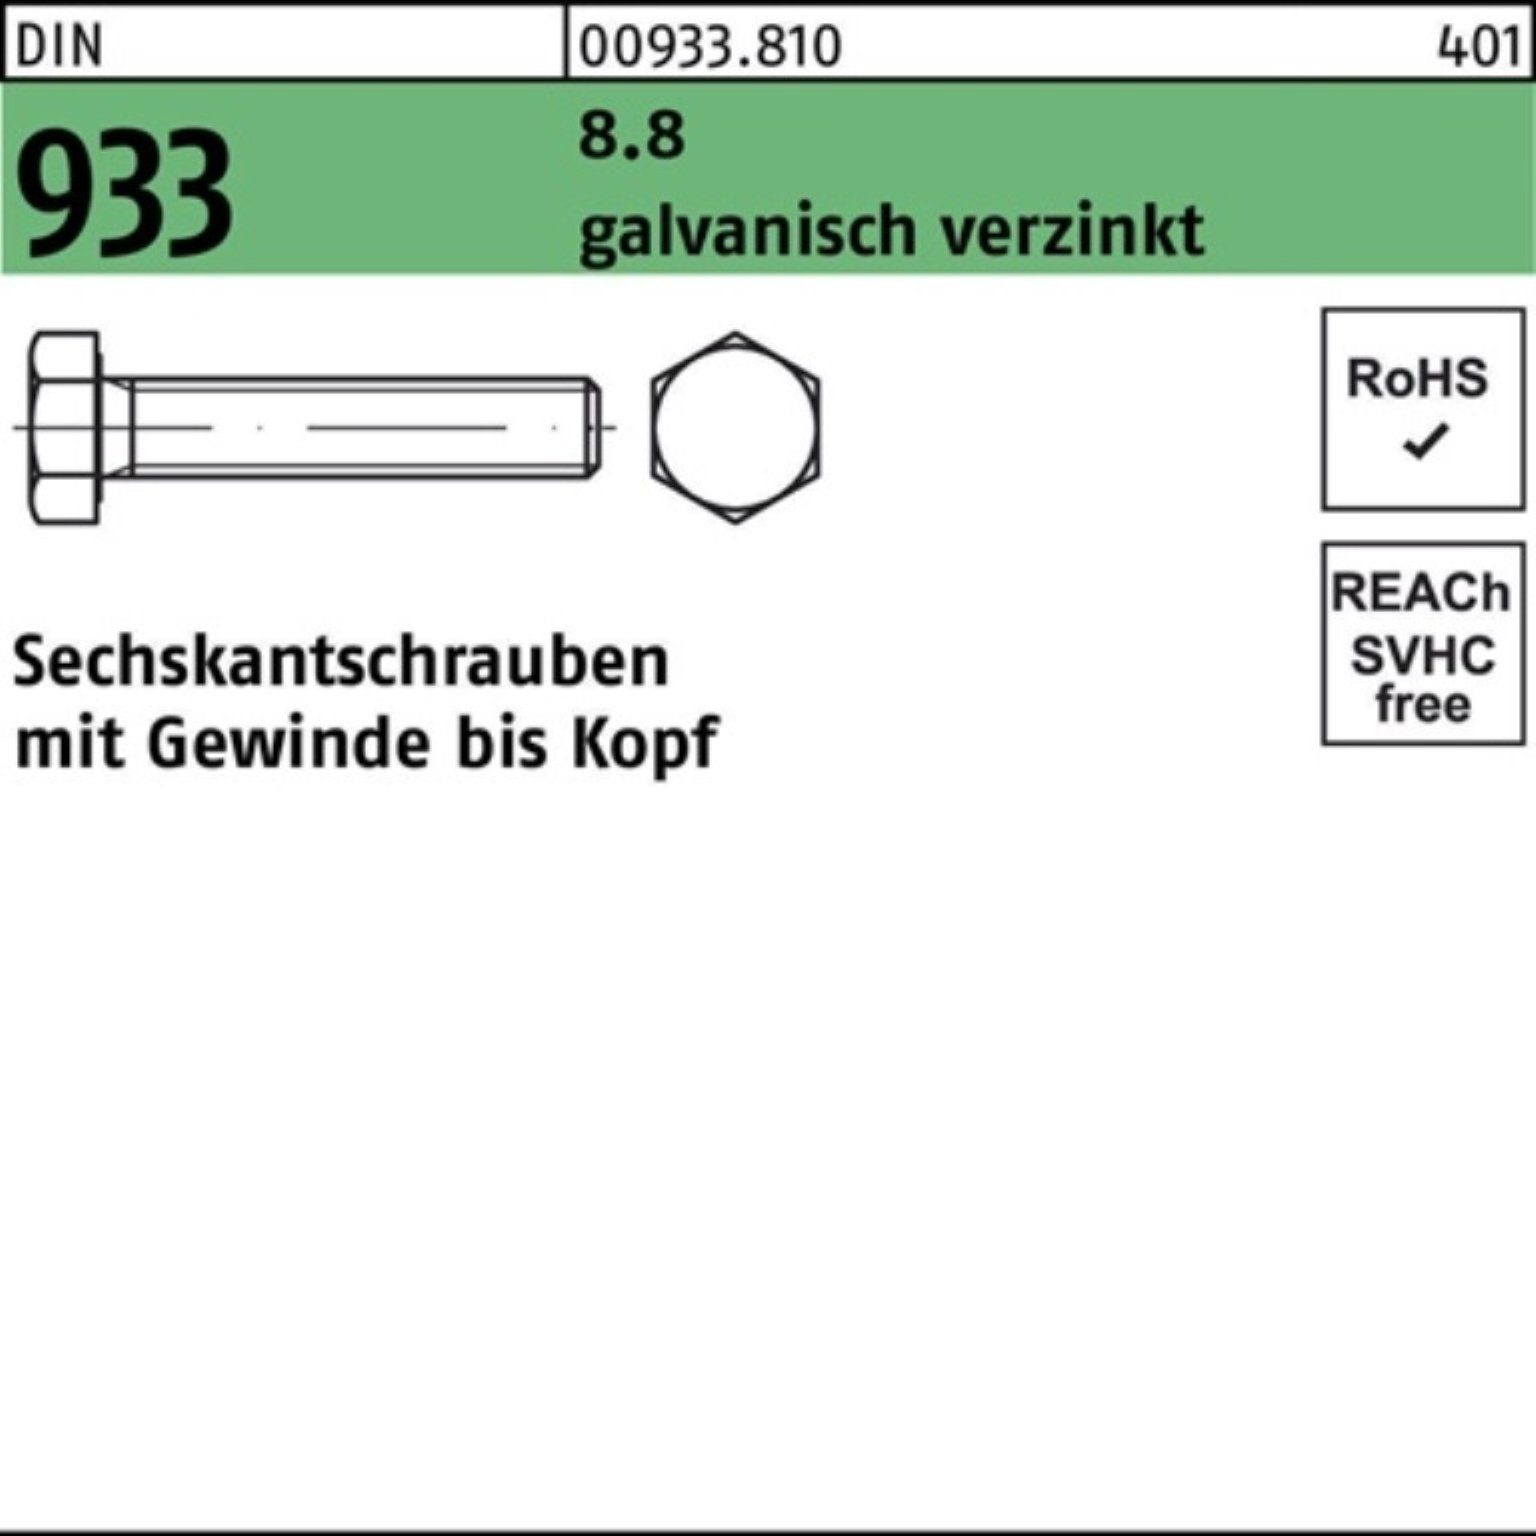 Reyher Sechskantschraube galv.verz. M8x 200er 200 VG DIN Stüc Pack 933 8 Sechskantschraube 8.8